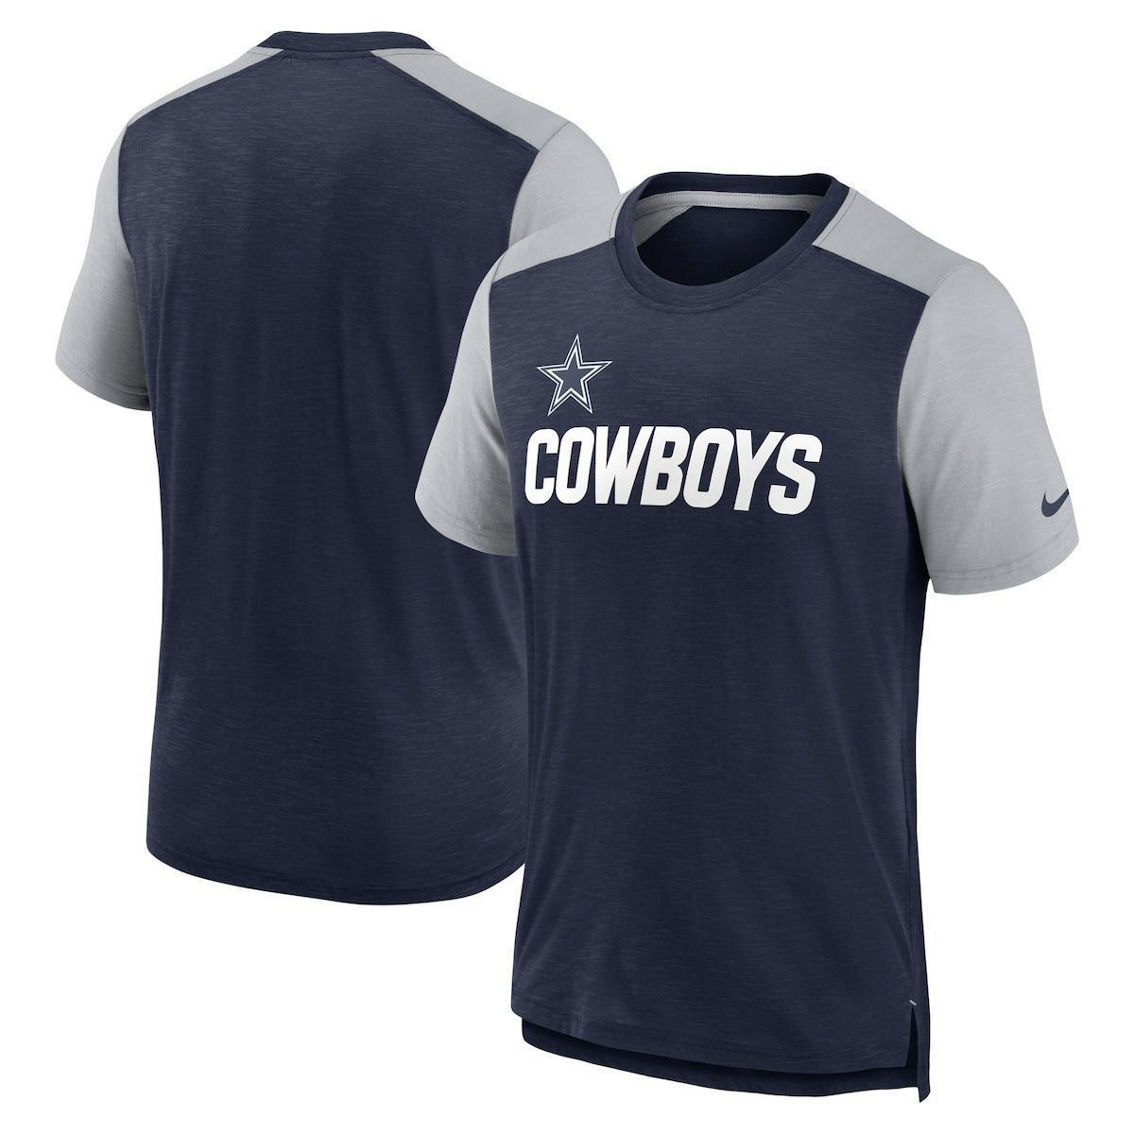 Men's Nike Heathered Navy/Heathered Gray Dallas Cowboys Color Block Team Name T-Shirt - Image 2 of 4